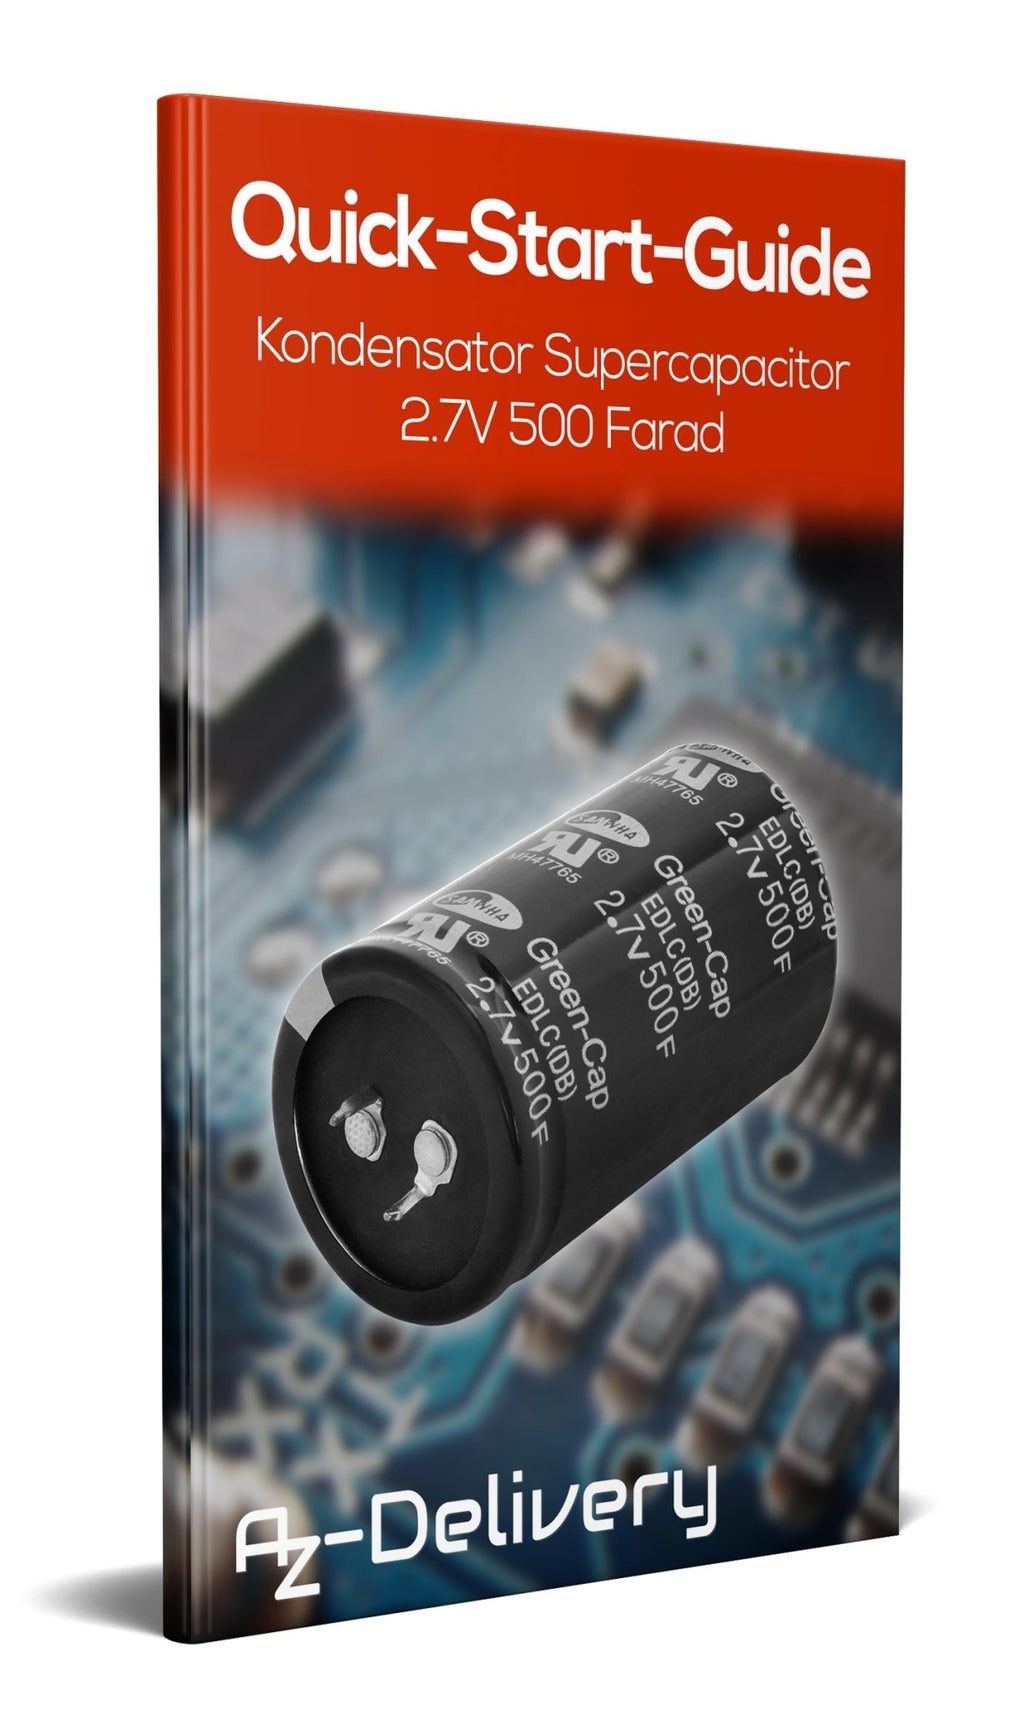 alder skjule september Condensator Supercapacitor 2.7V 500 Farad – AZ-Delivery